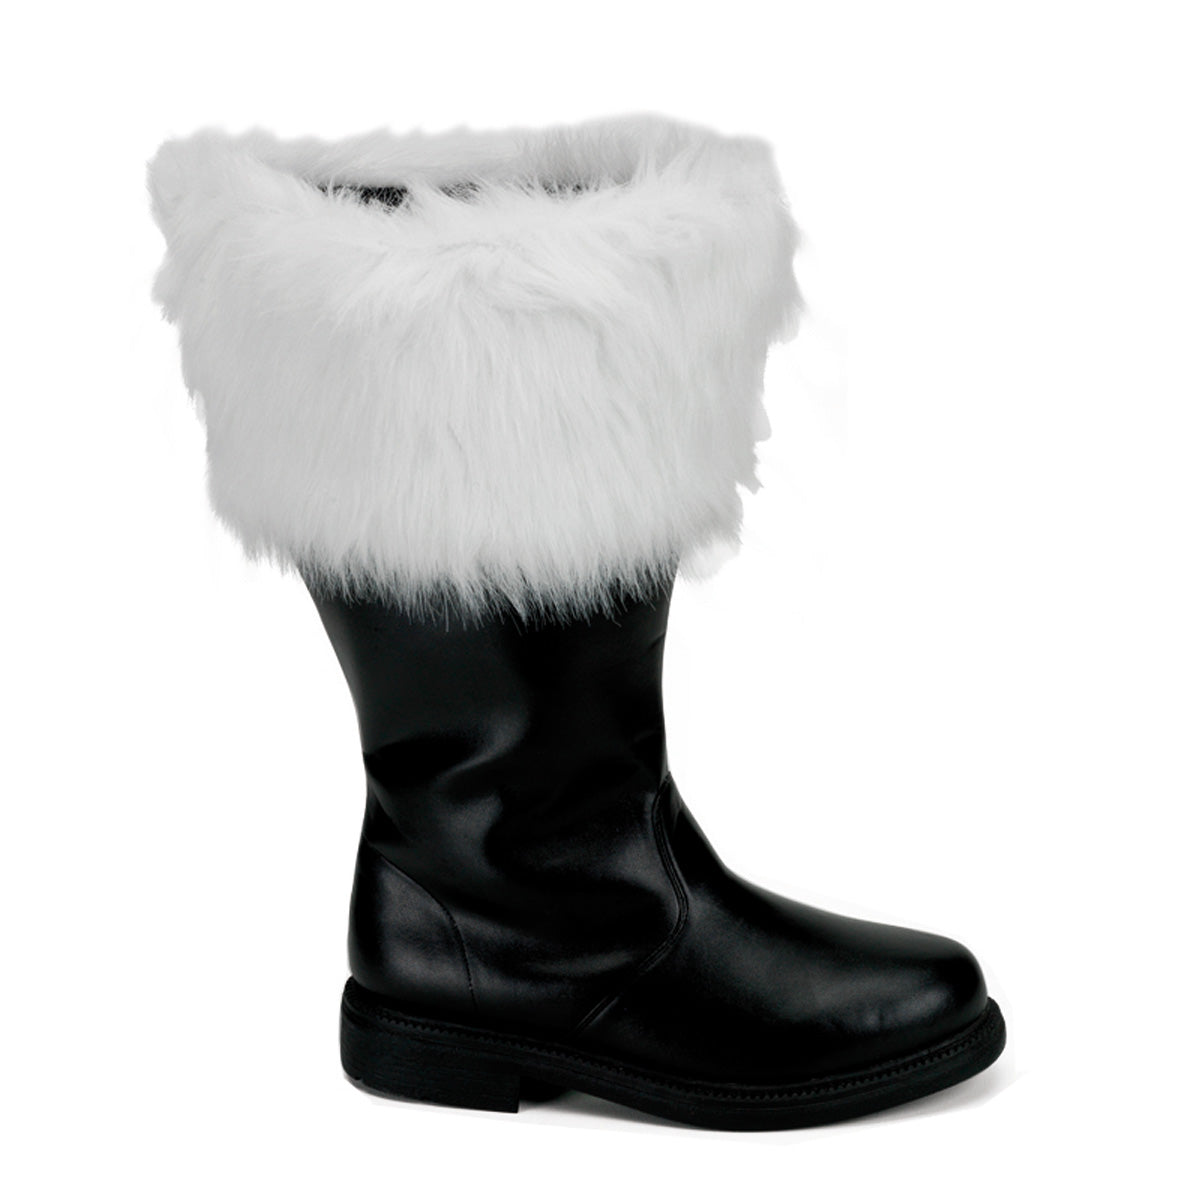 SANTA-106WC Funtasma 1" Black White Wide Width/Shaft Boots Funtasma Costume Shoes